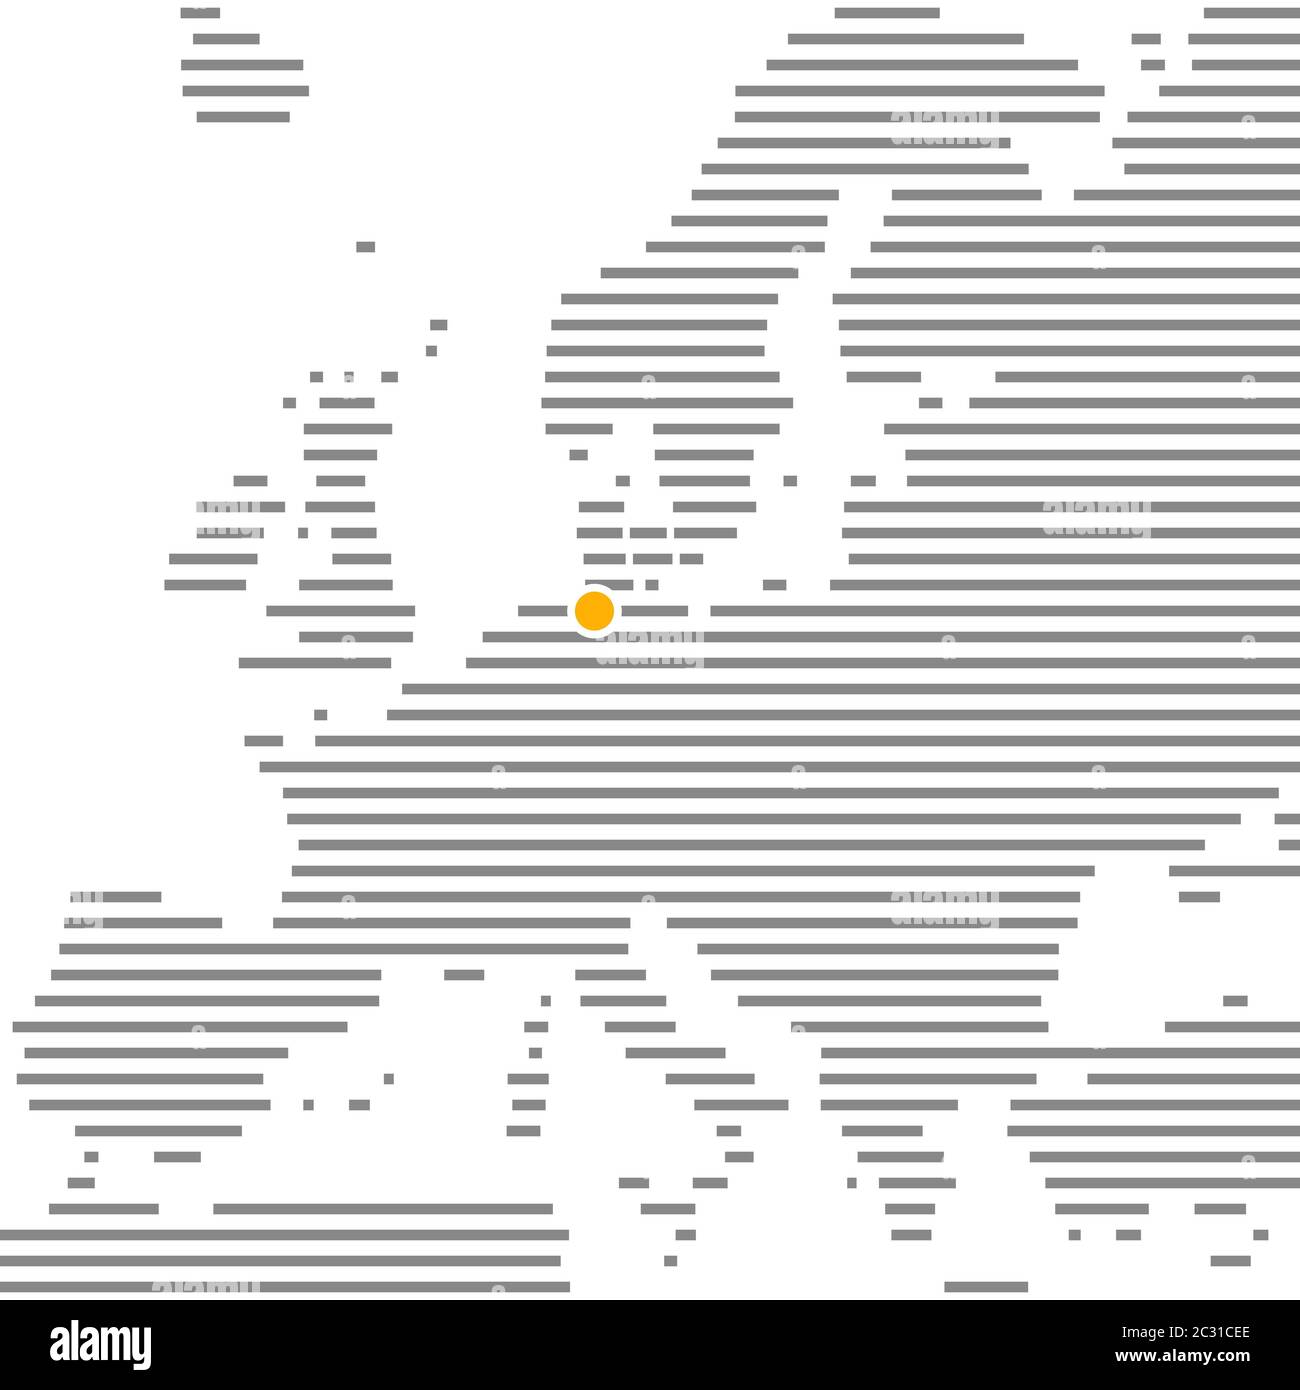 City Hamburg in Germany on grey striped map of Europe with orange dot Stock Photo